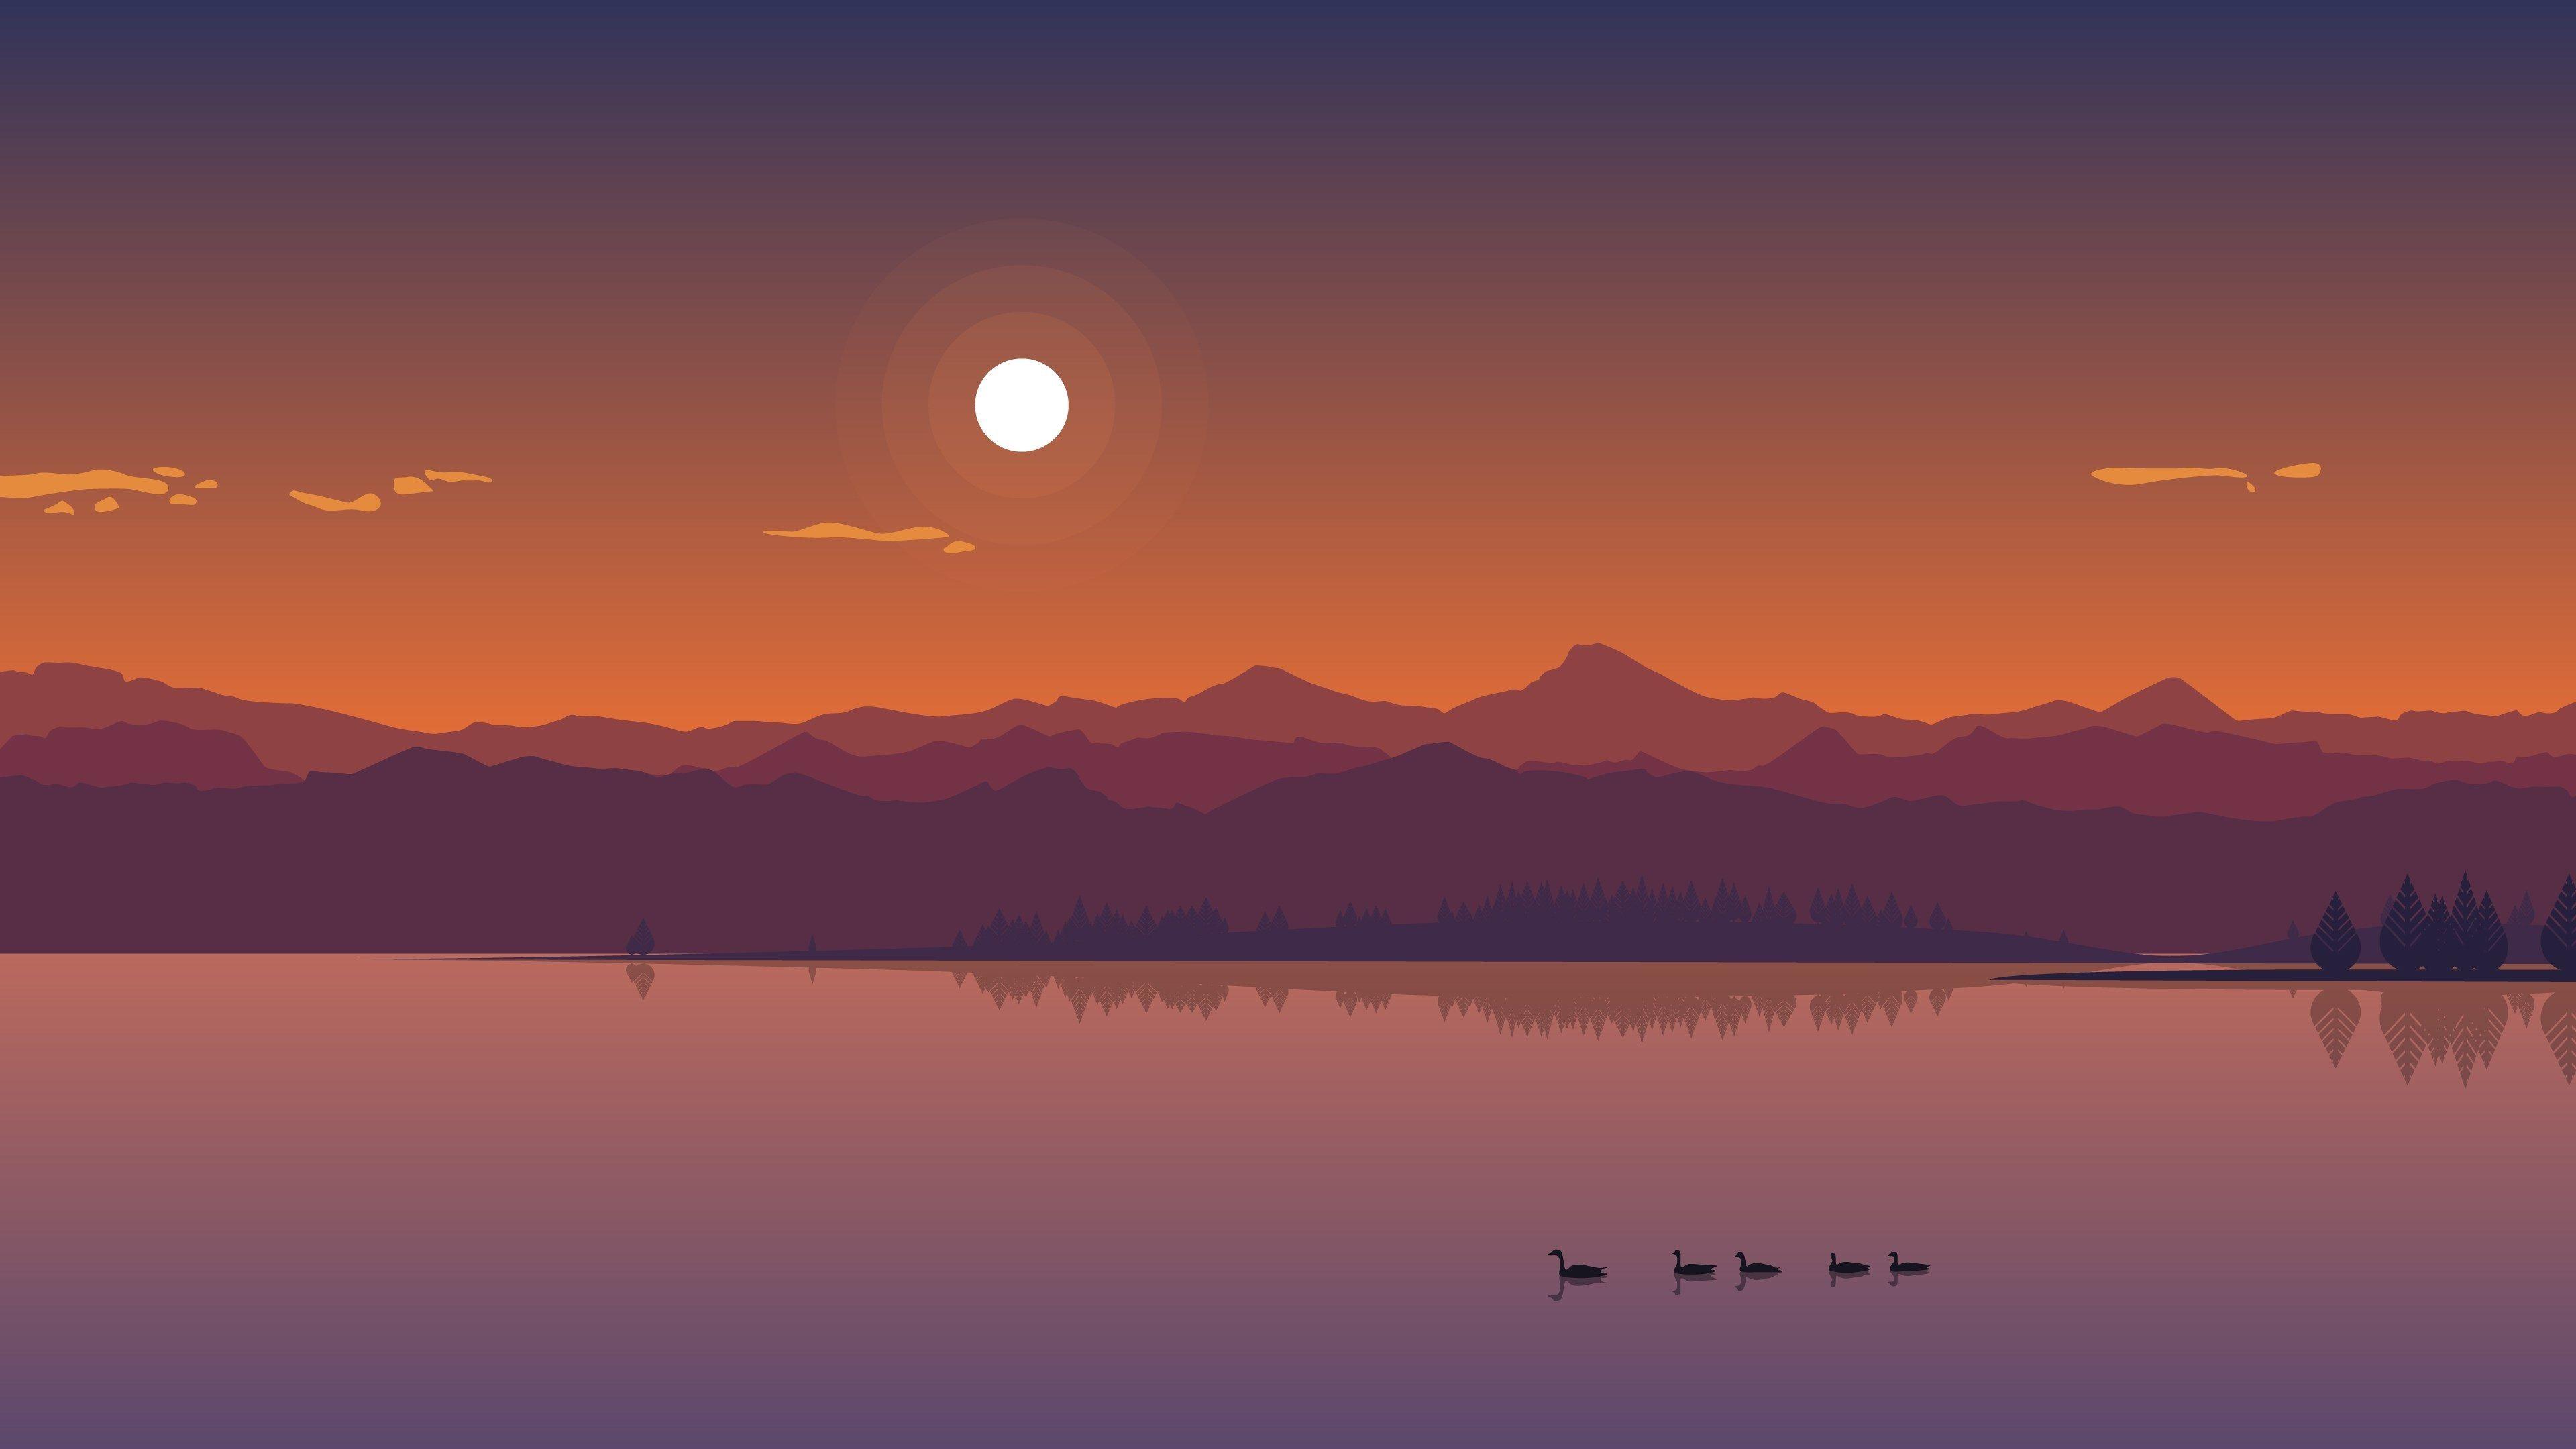 minimalism 4k theme background image. Sunset wallpaper